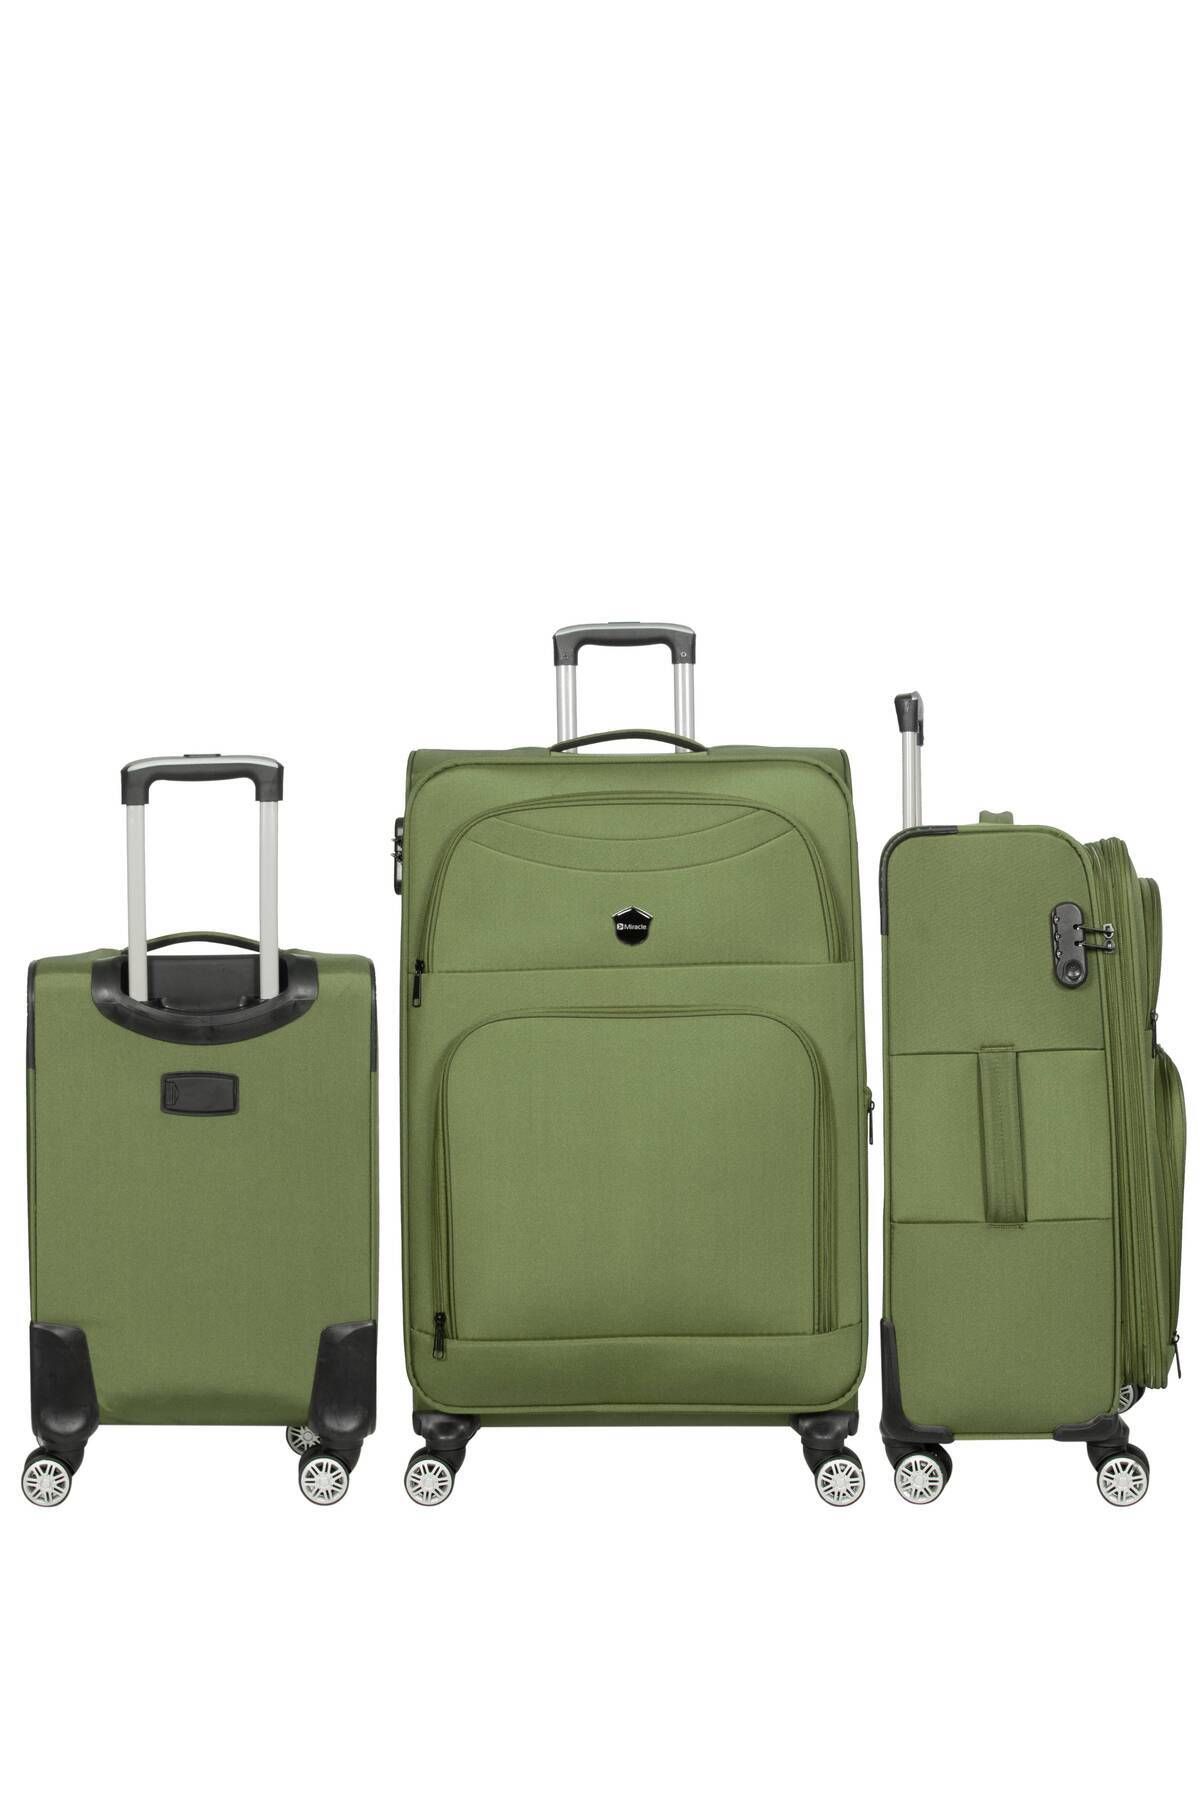 Miracle Ultra Lüks Ekstra Hafif Kabin Orta ve Büyük Boy 3'lü Set tekerlekli valiz seyahat valizi